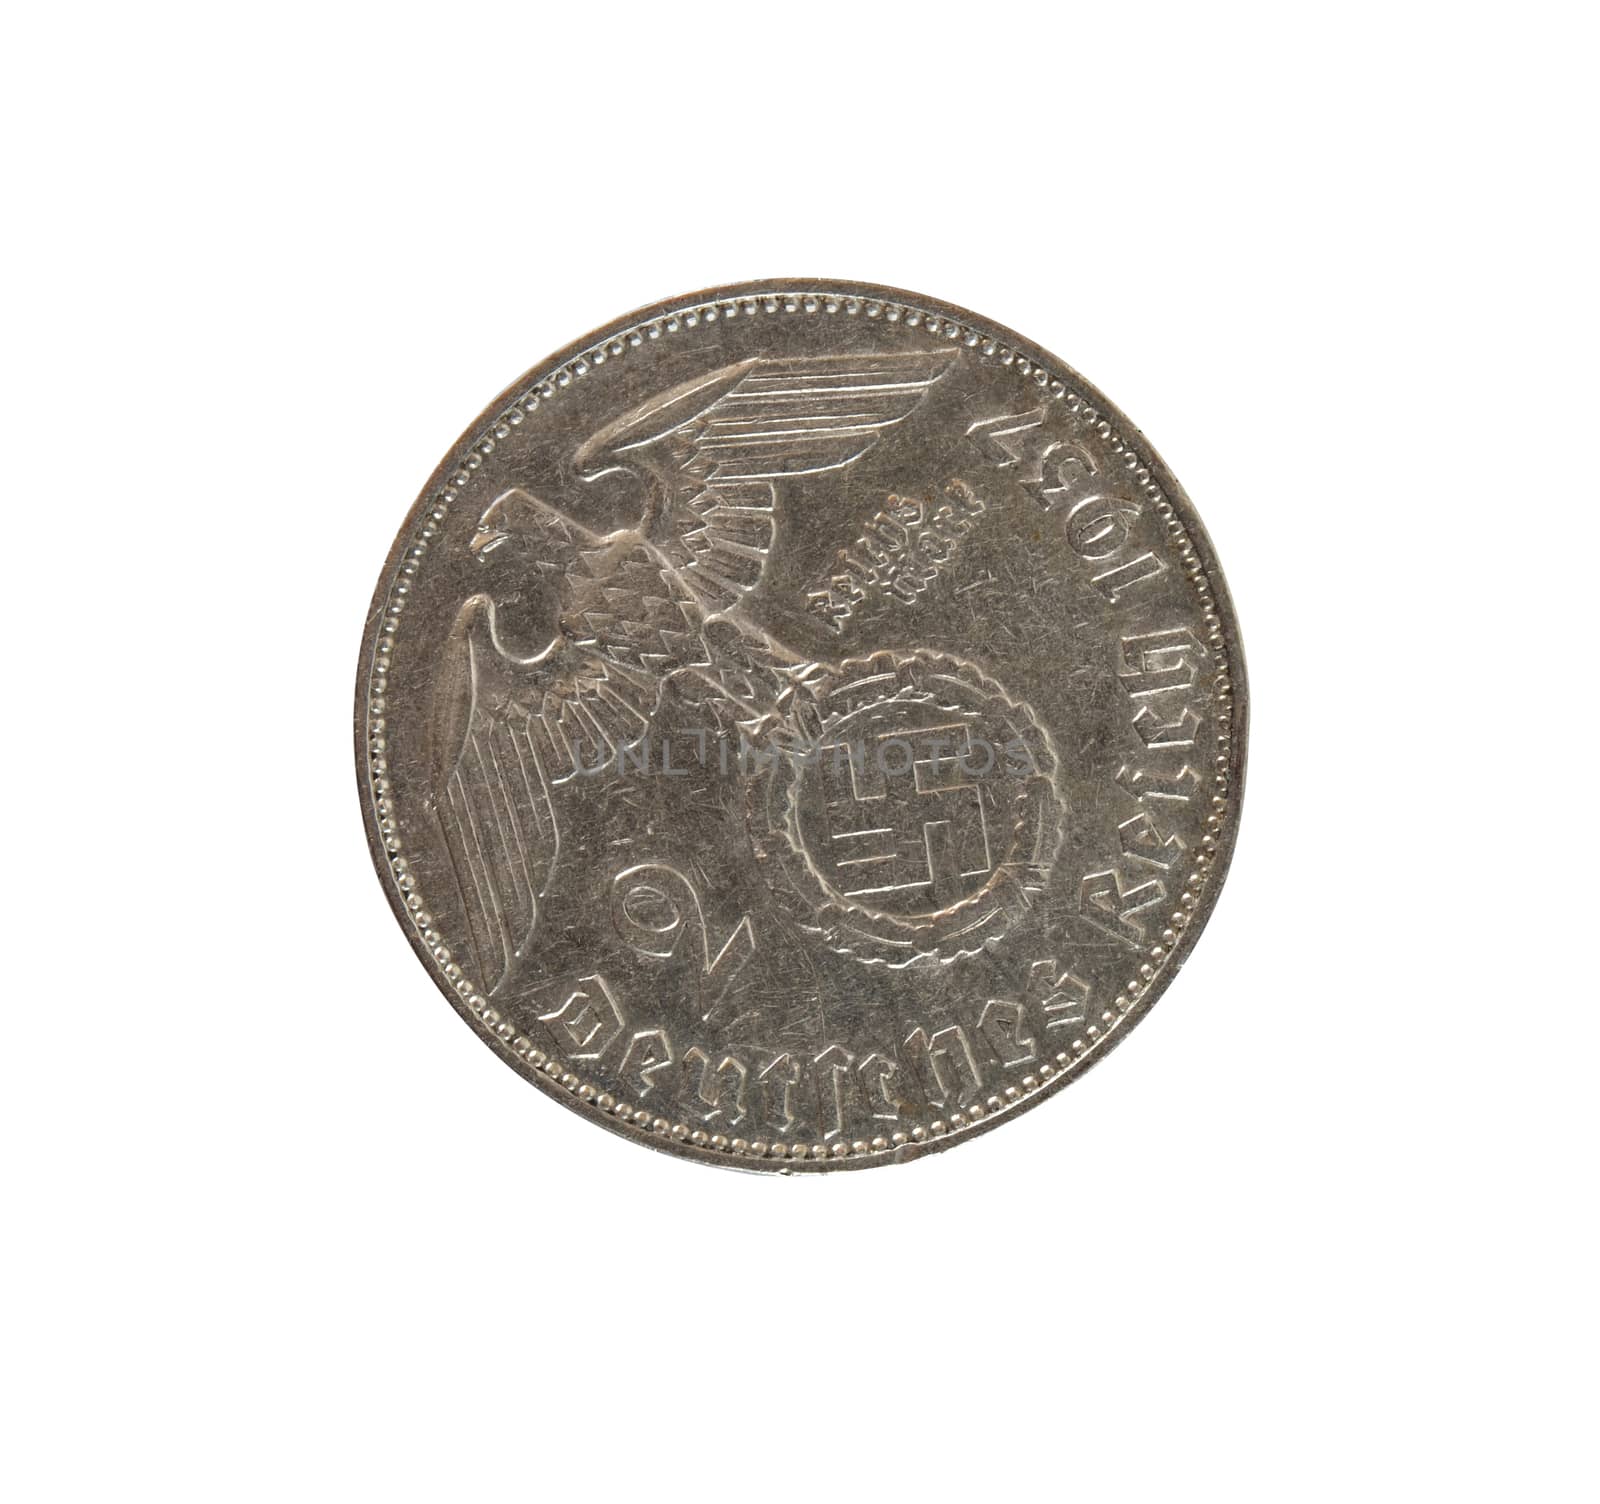 German coin 1937 by Vectorex